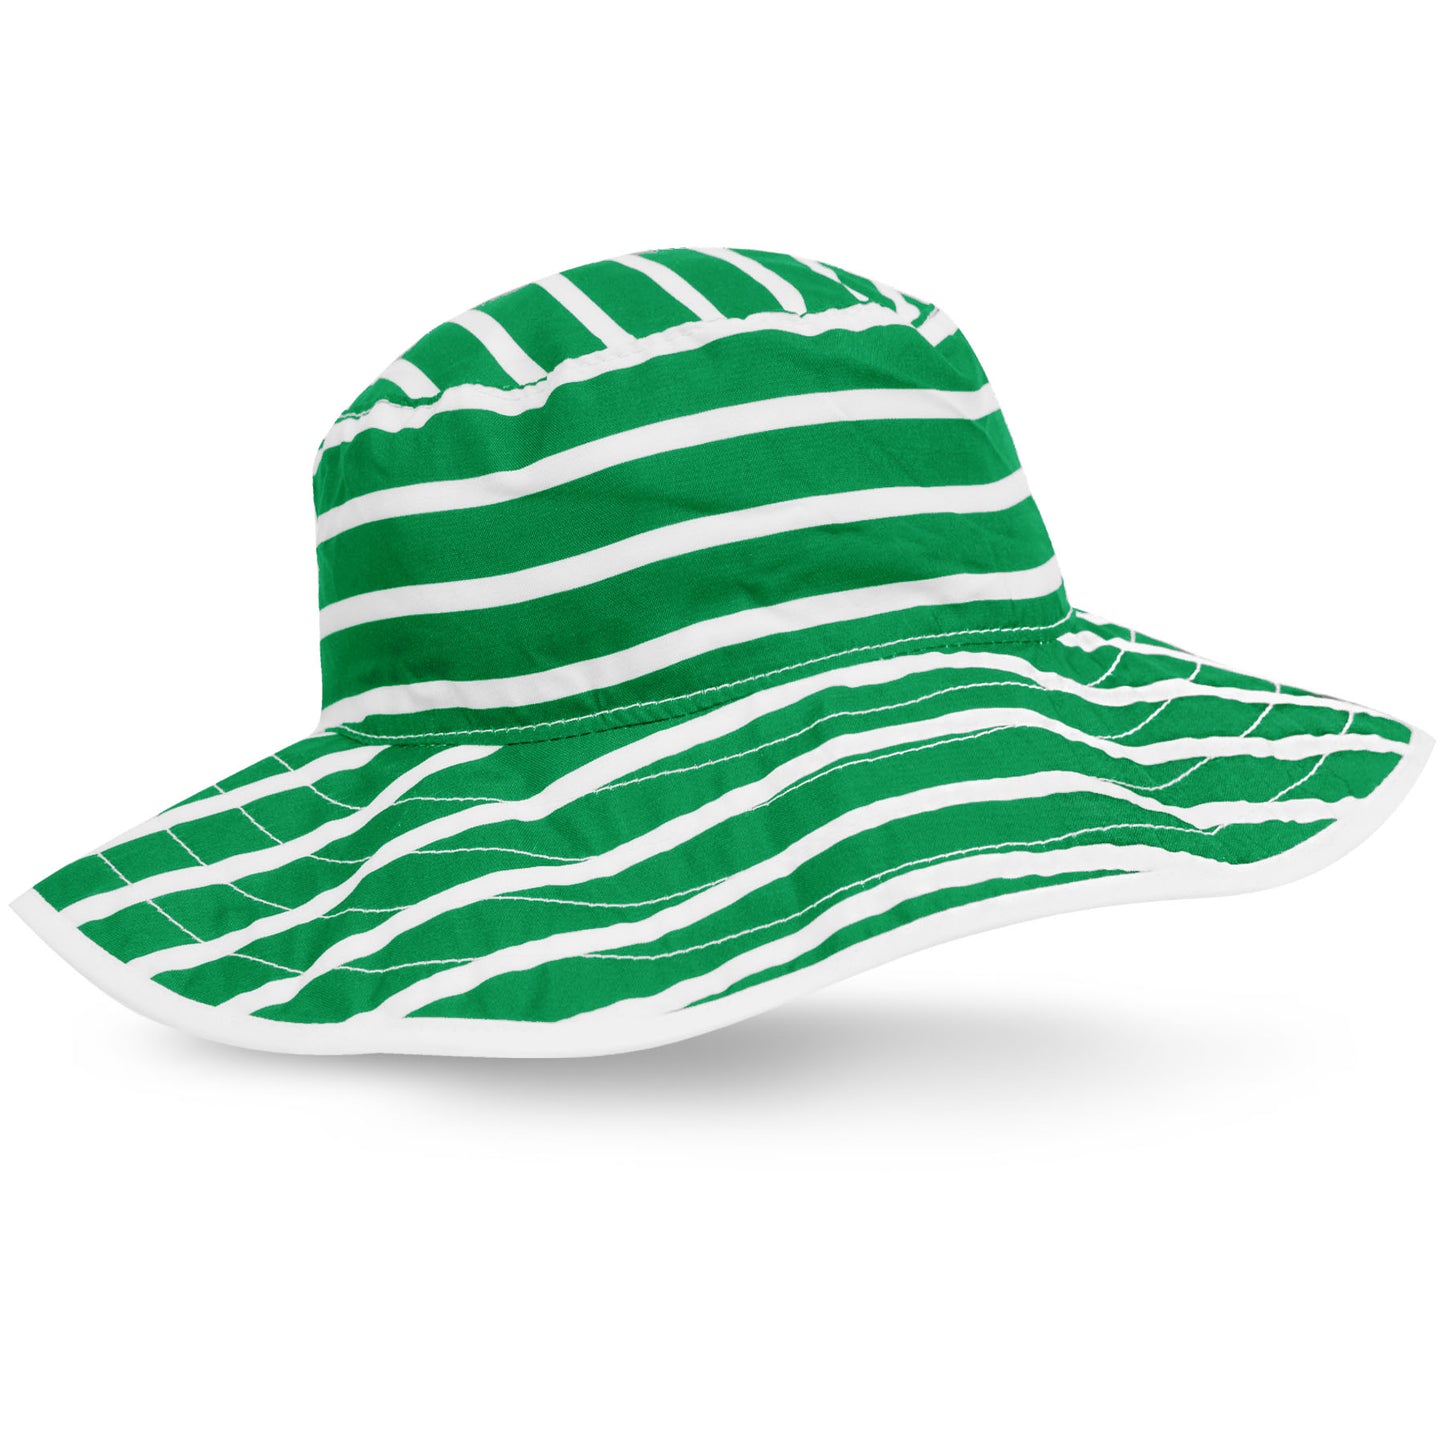 Baby Sun Hats - Reversible UPF 50+